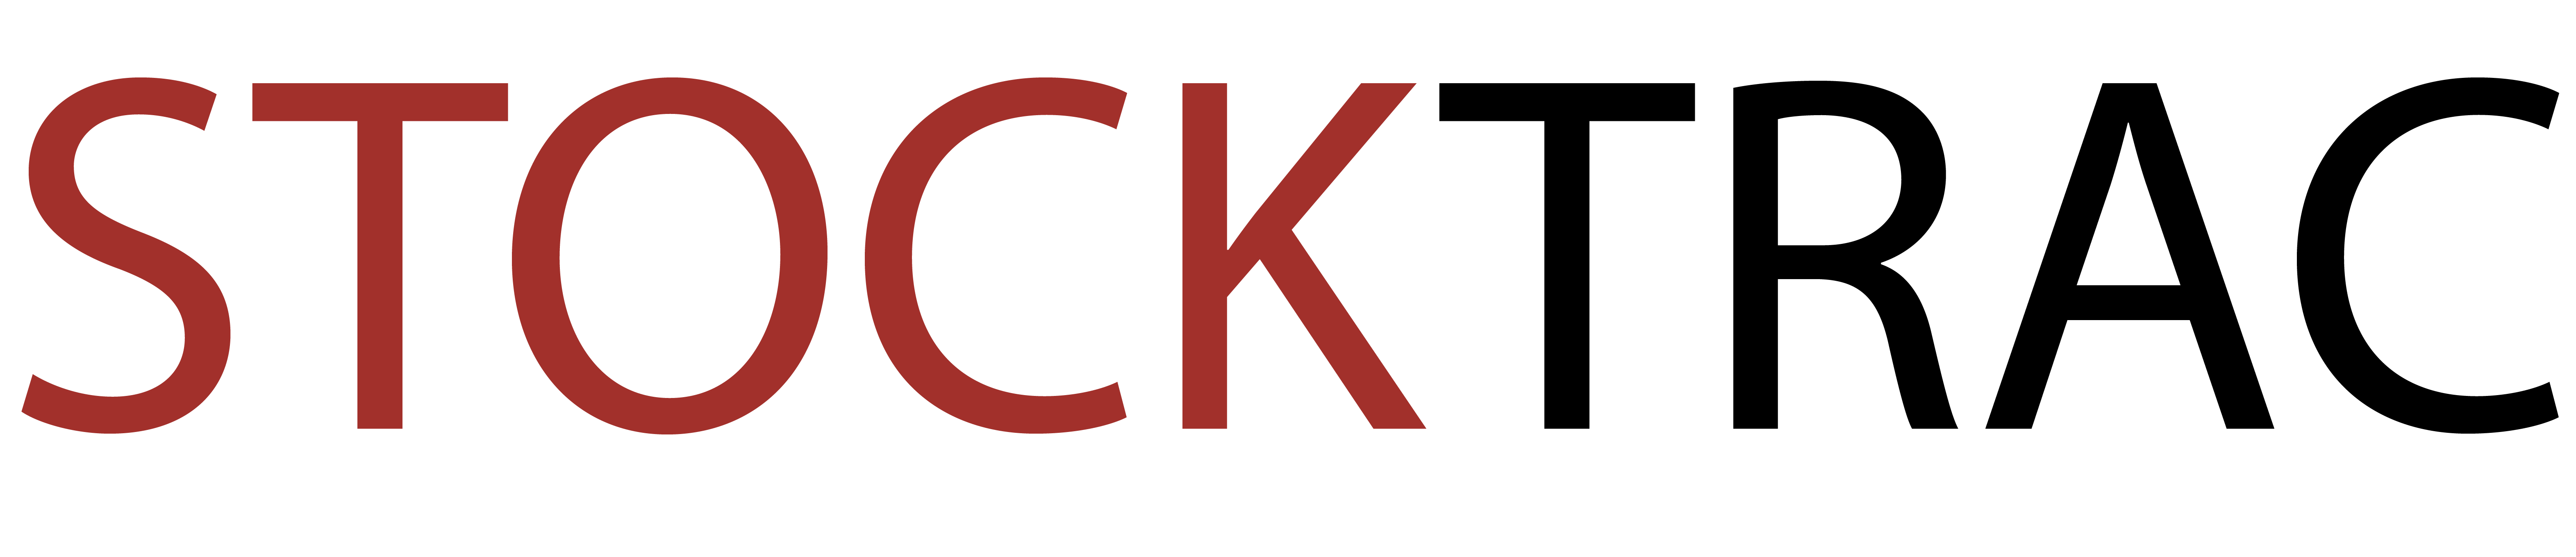 Stocktrac logo